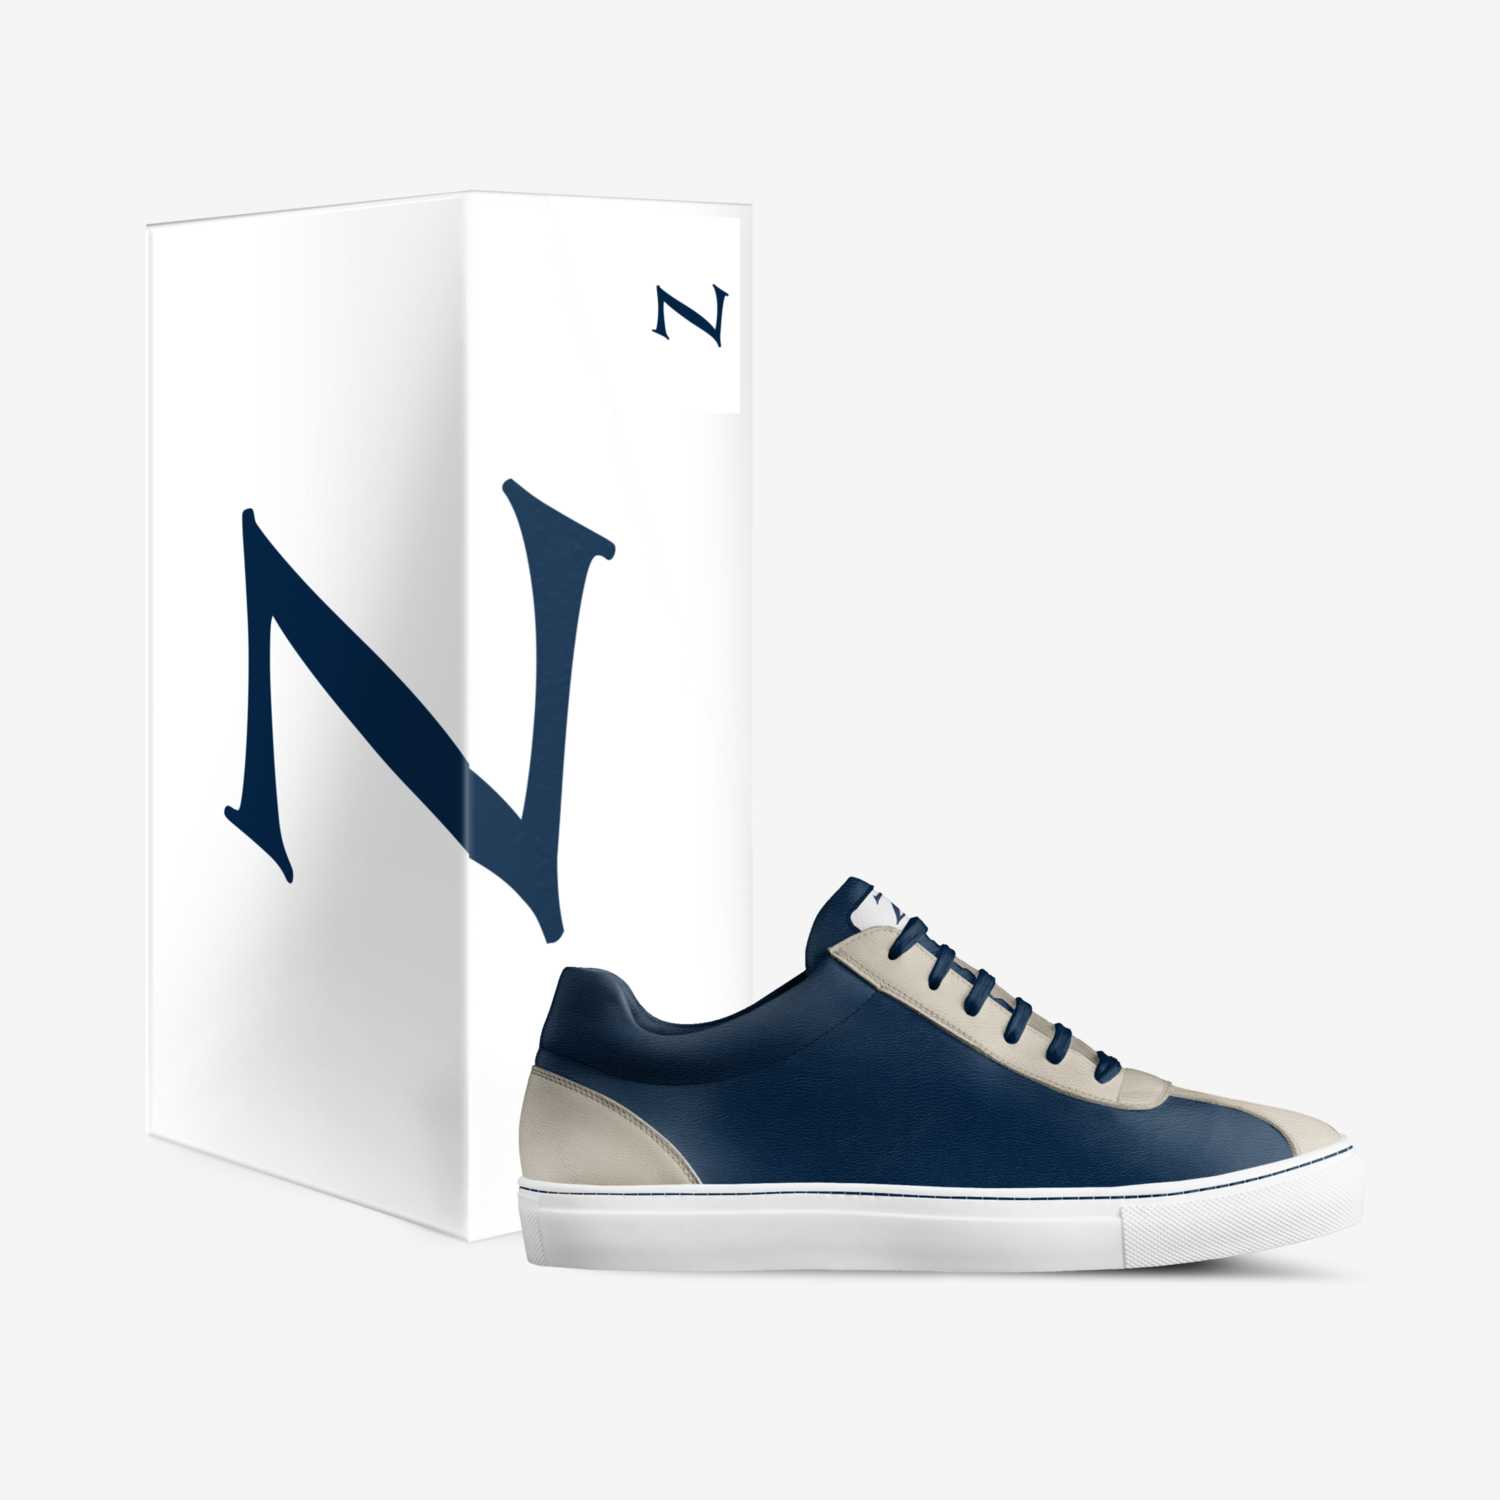 Zazou custom made in Italy shoes by Stéphane Juban | Box view